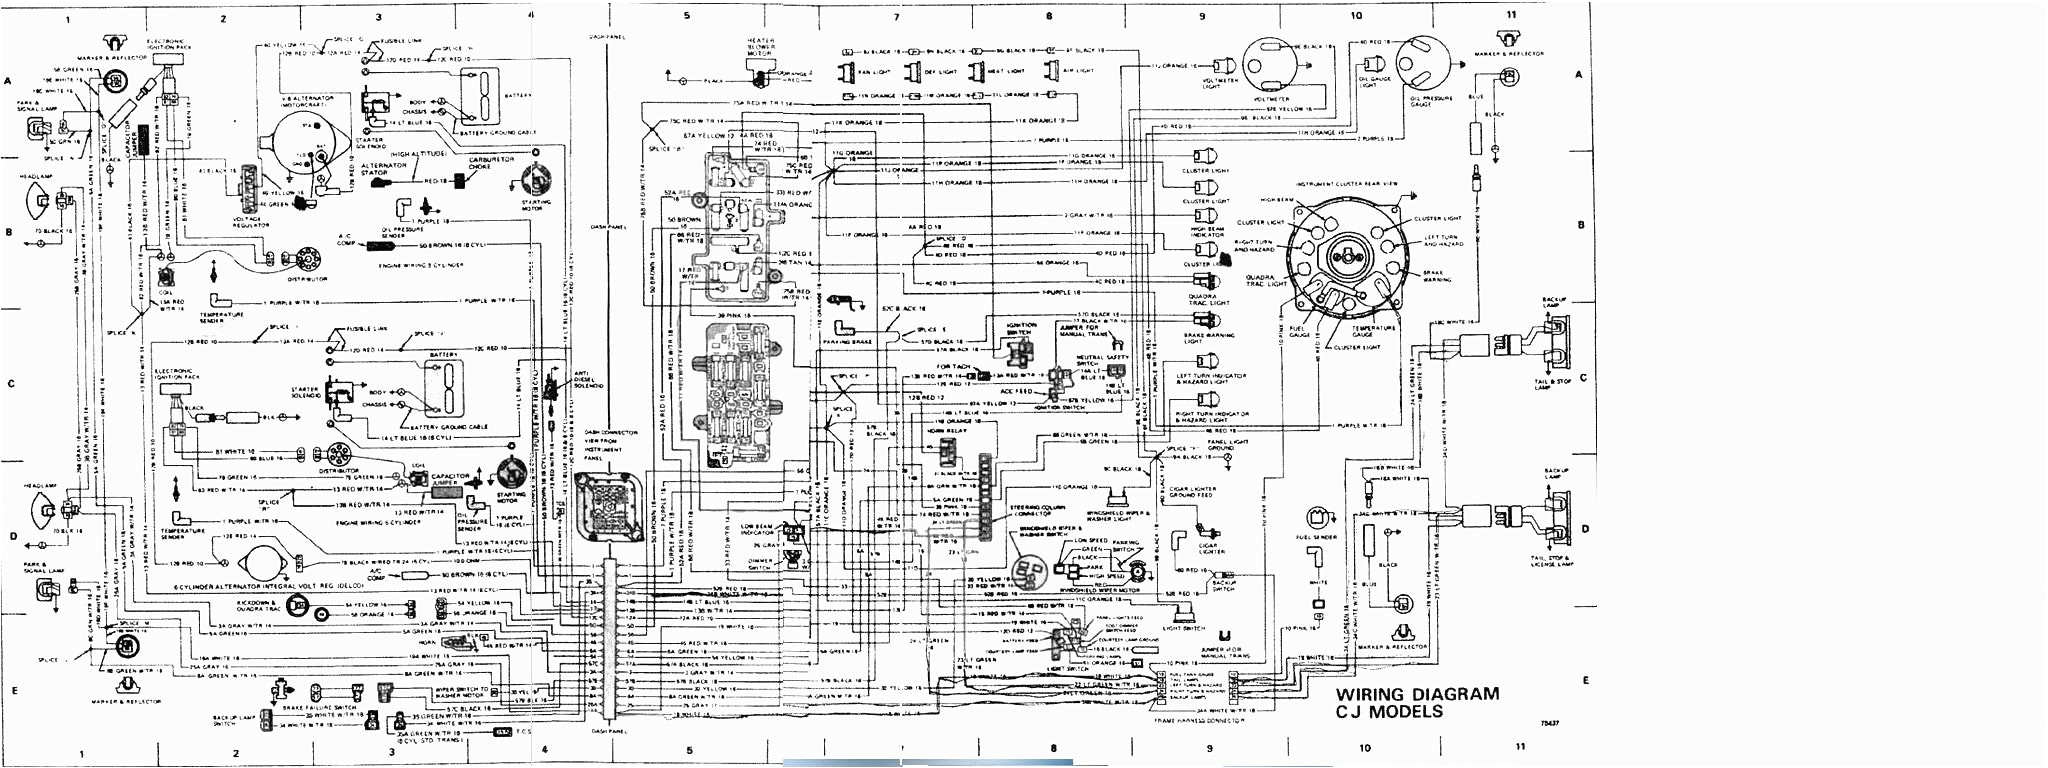 1978 cj7 wiring harness diagram search wiring diagram mix 1978 jeep cj7 wiring harness wiring diagram